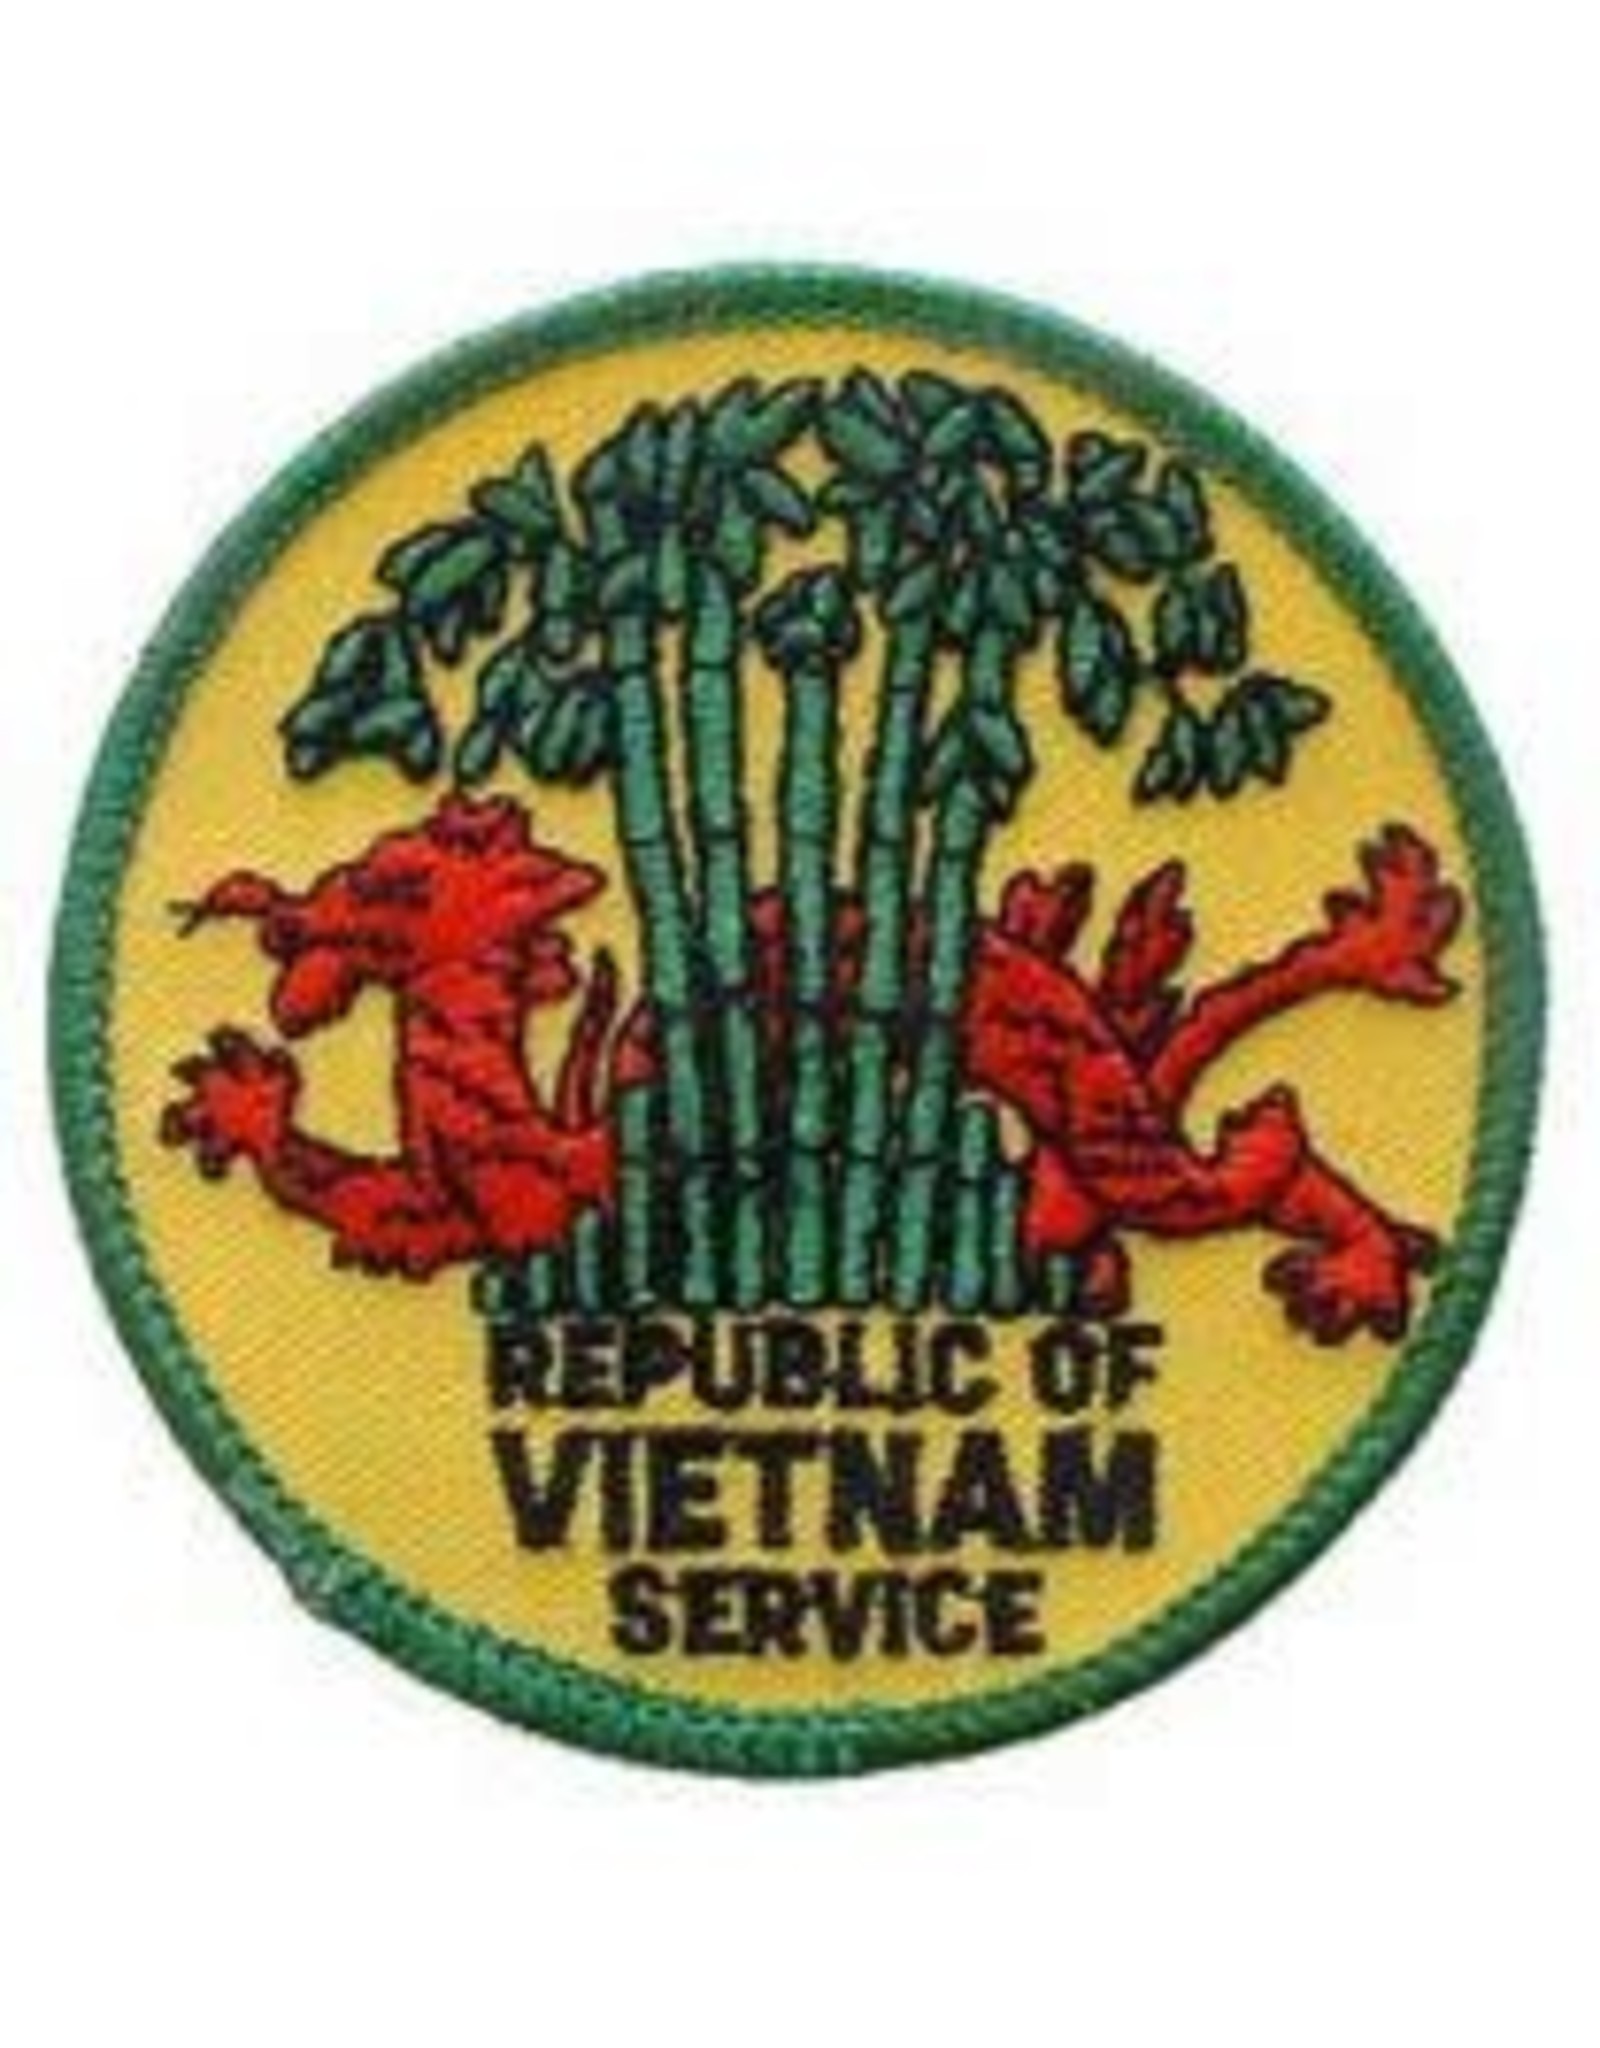 Patch - Vietnam Republic of Service